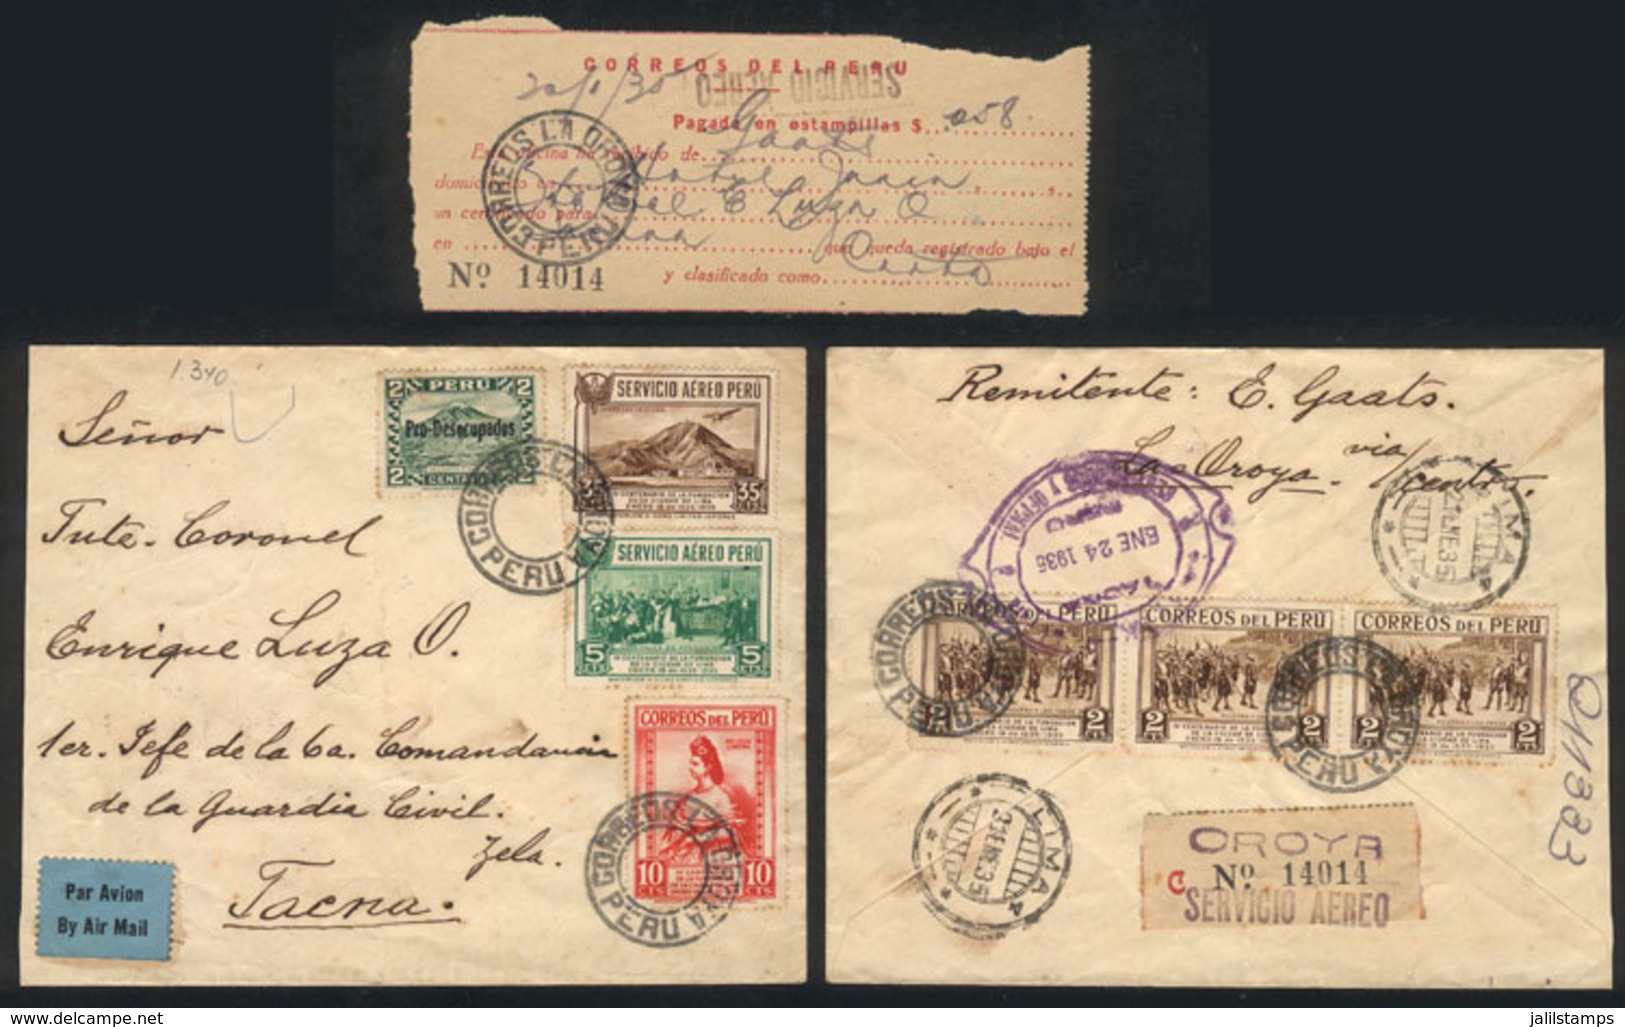 PERU: 20/JA/1935 Oroya - Tacna Via Lima, Registered Airmail Cover With 56c. Postage (1c. Extra) + 2c. Cinderella, With T - Pérou